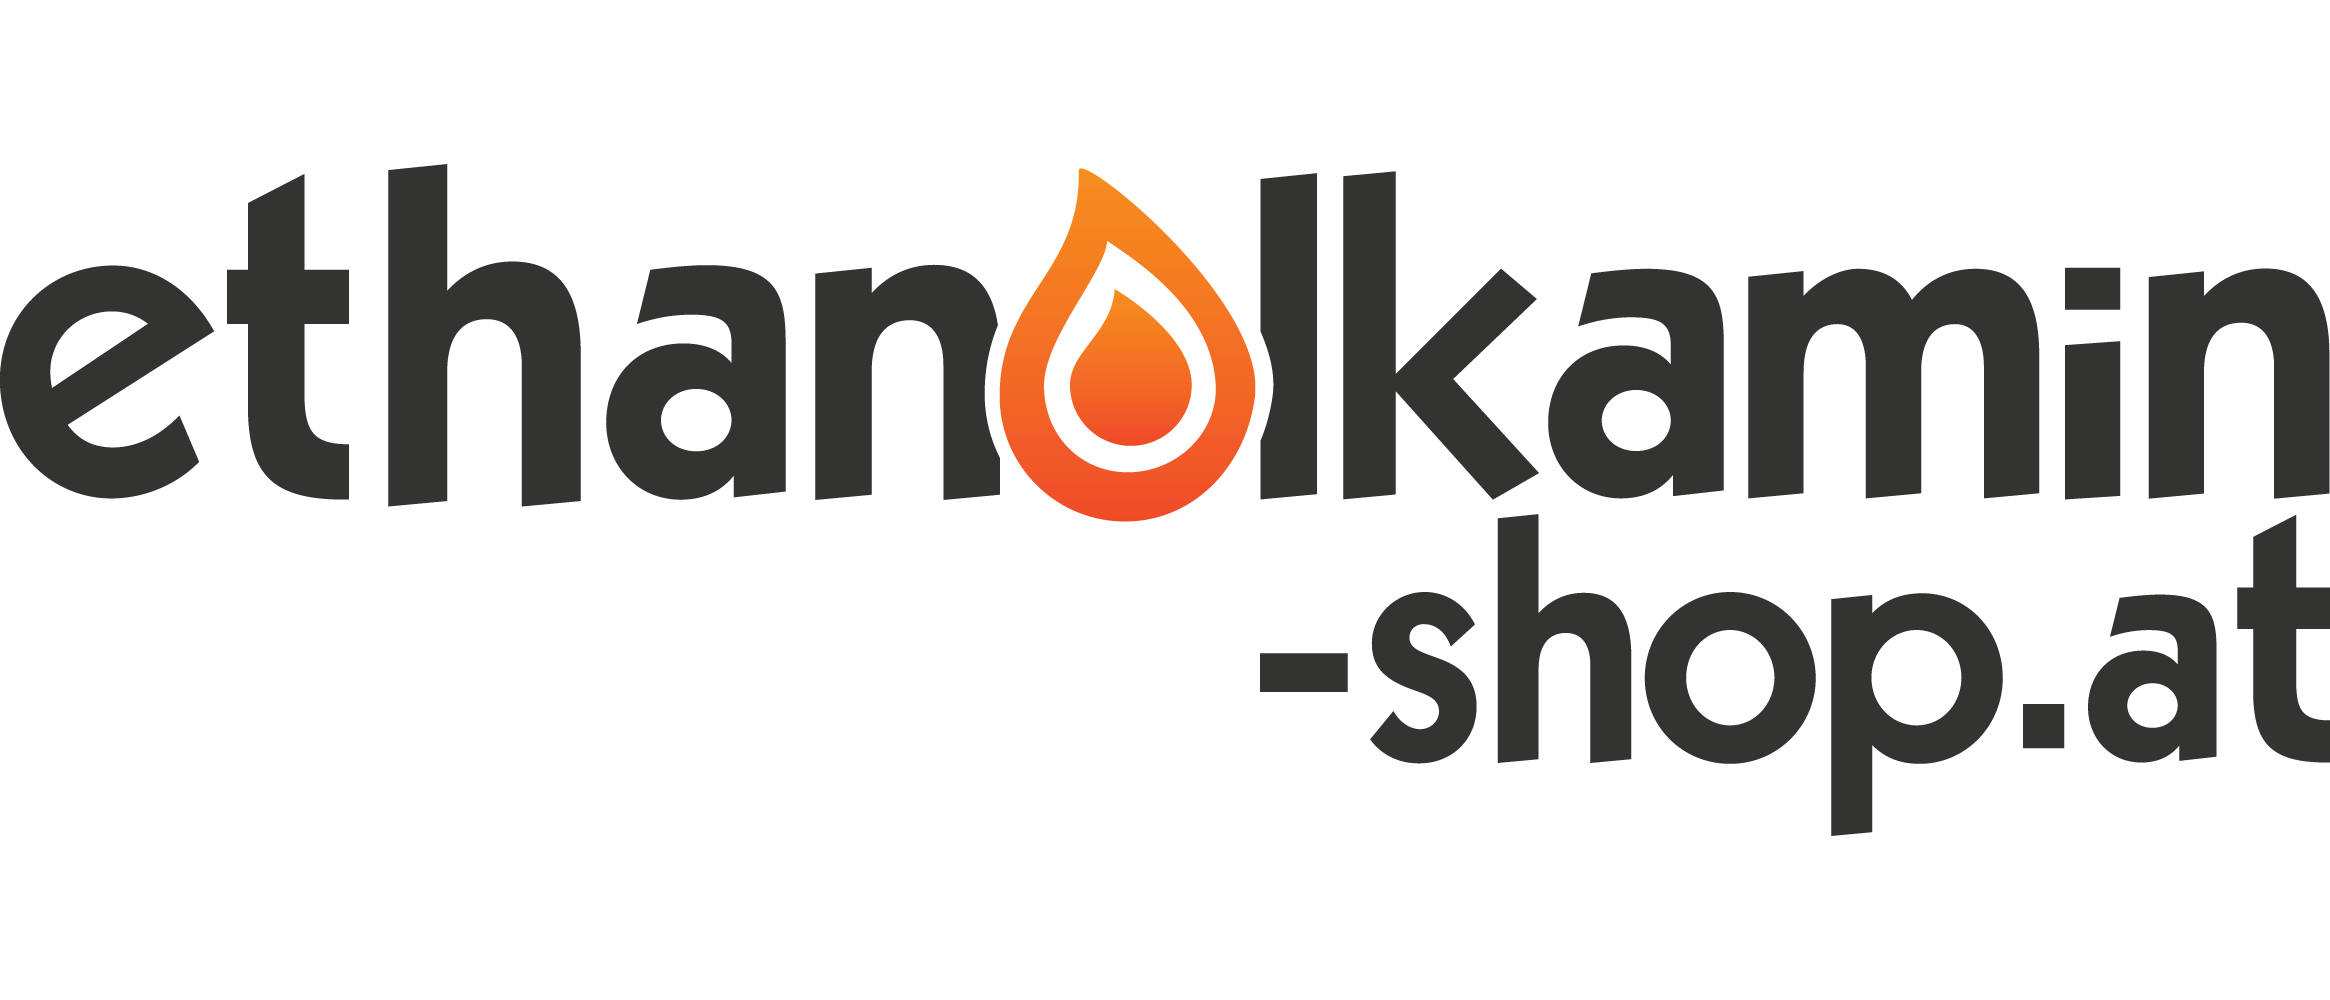 Ethanolkamin-shop.at